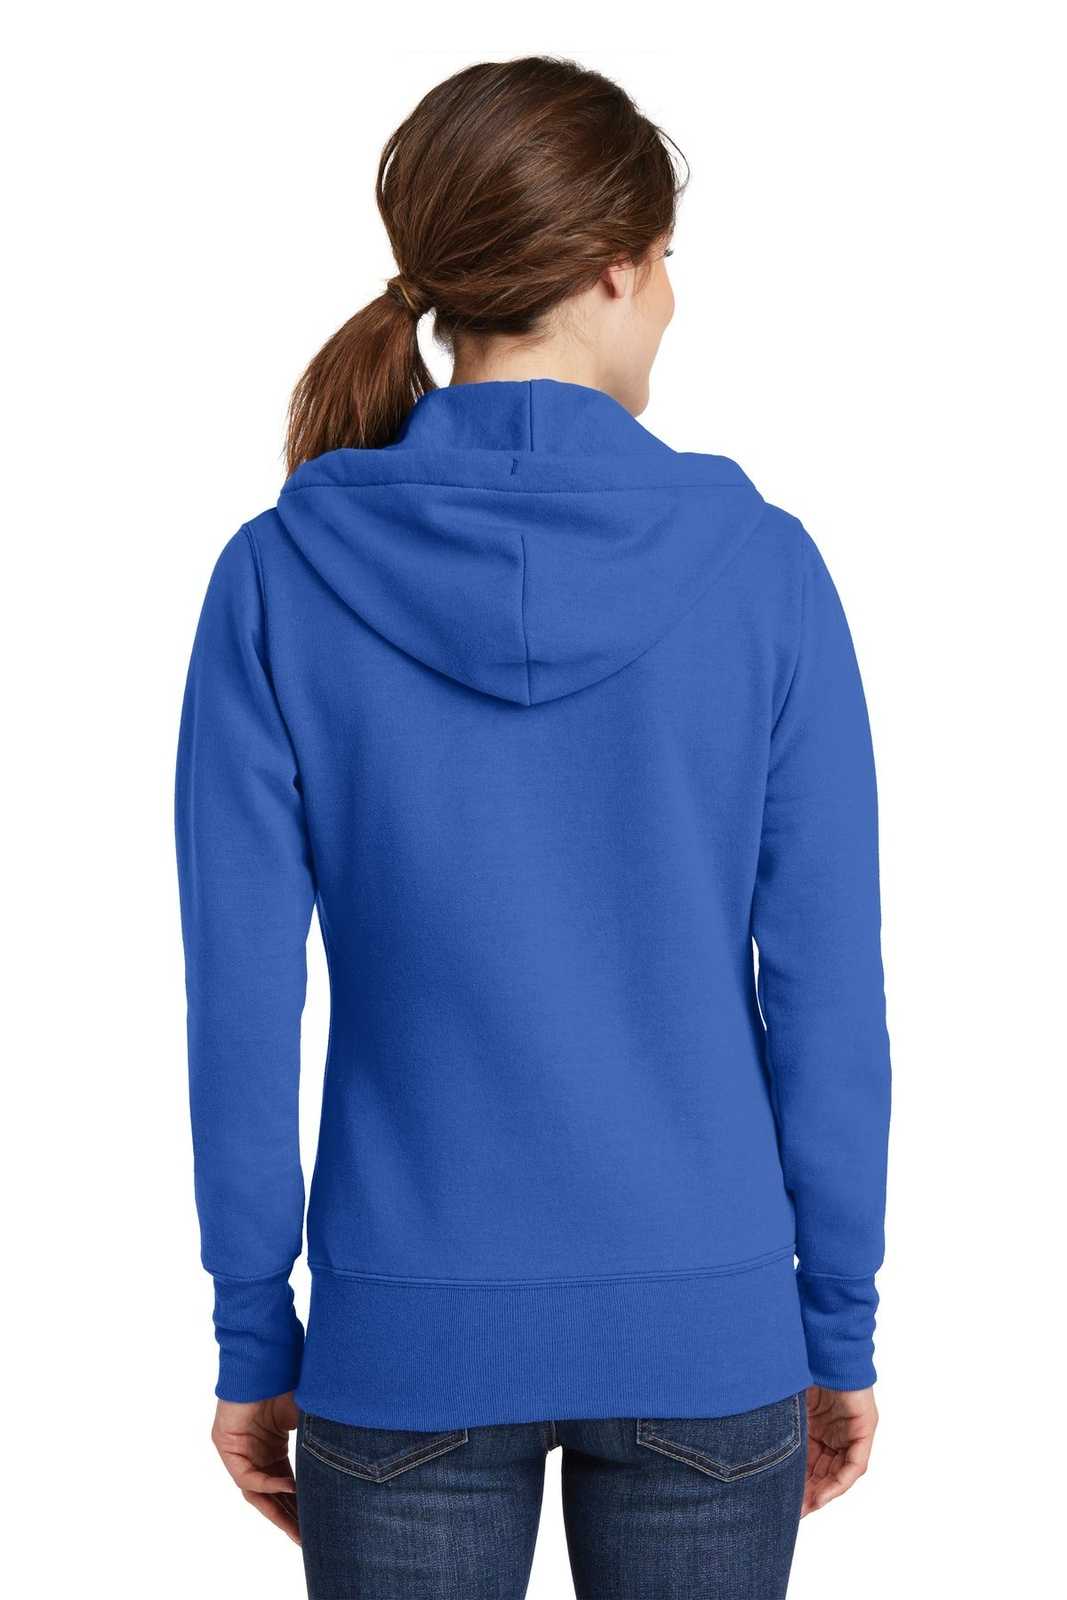 Port &amp; Company LPC78ZH Ladies Core Fleece Full-Zip Hooded Sweatshirt - Royal - HIT a Double - 2